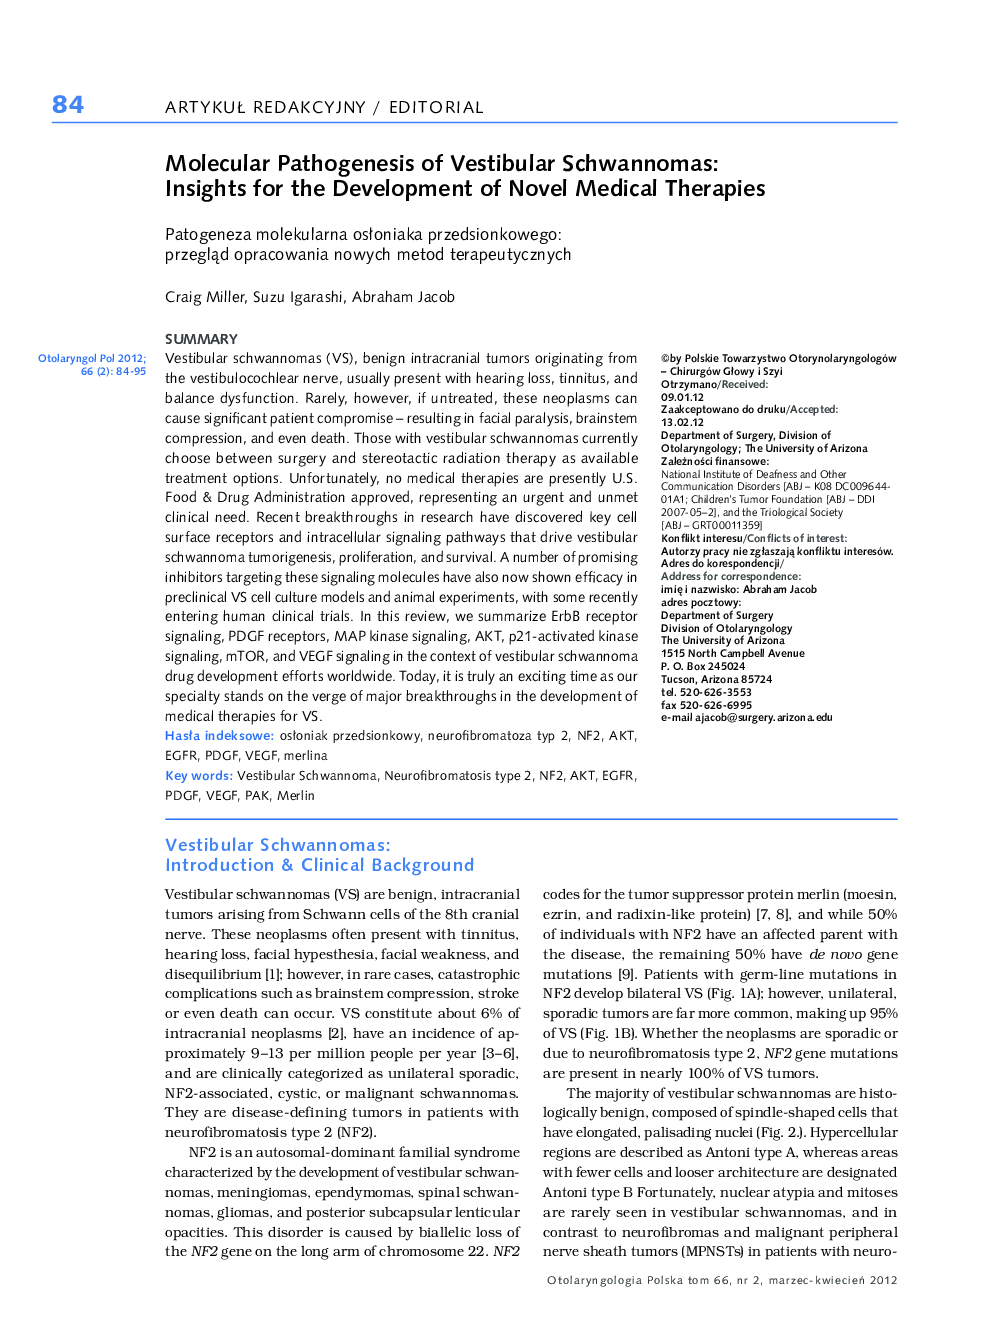 Molecular Pathogenesis of Vestibular Schwannomas: Insights for the Development of Novel Medical Therapies